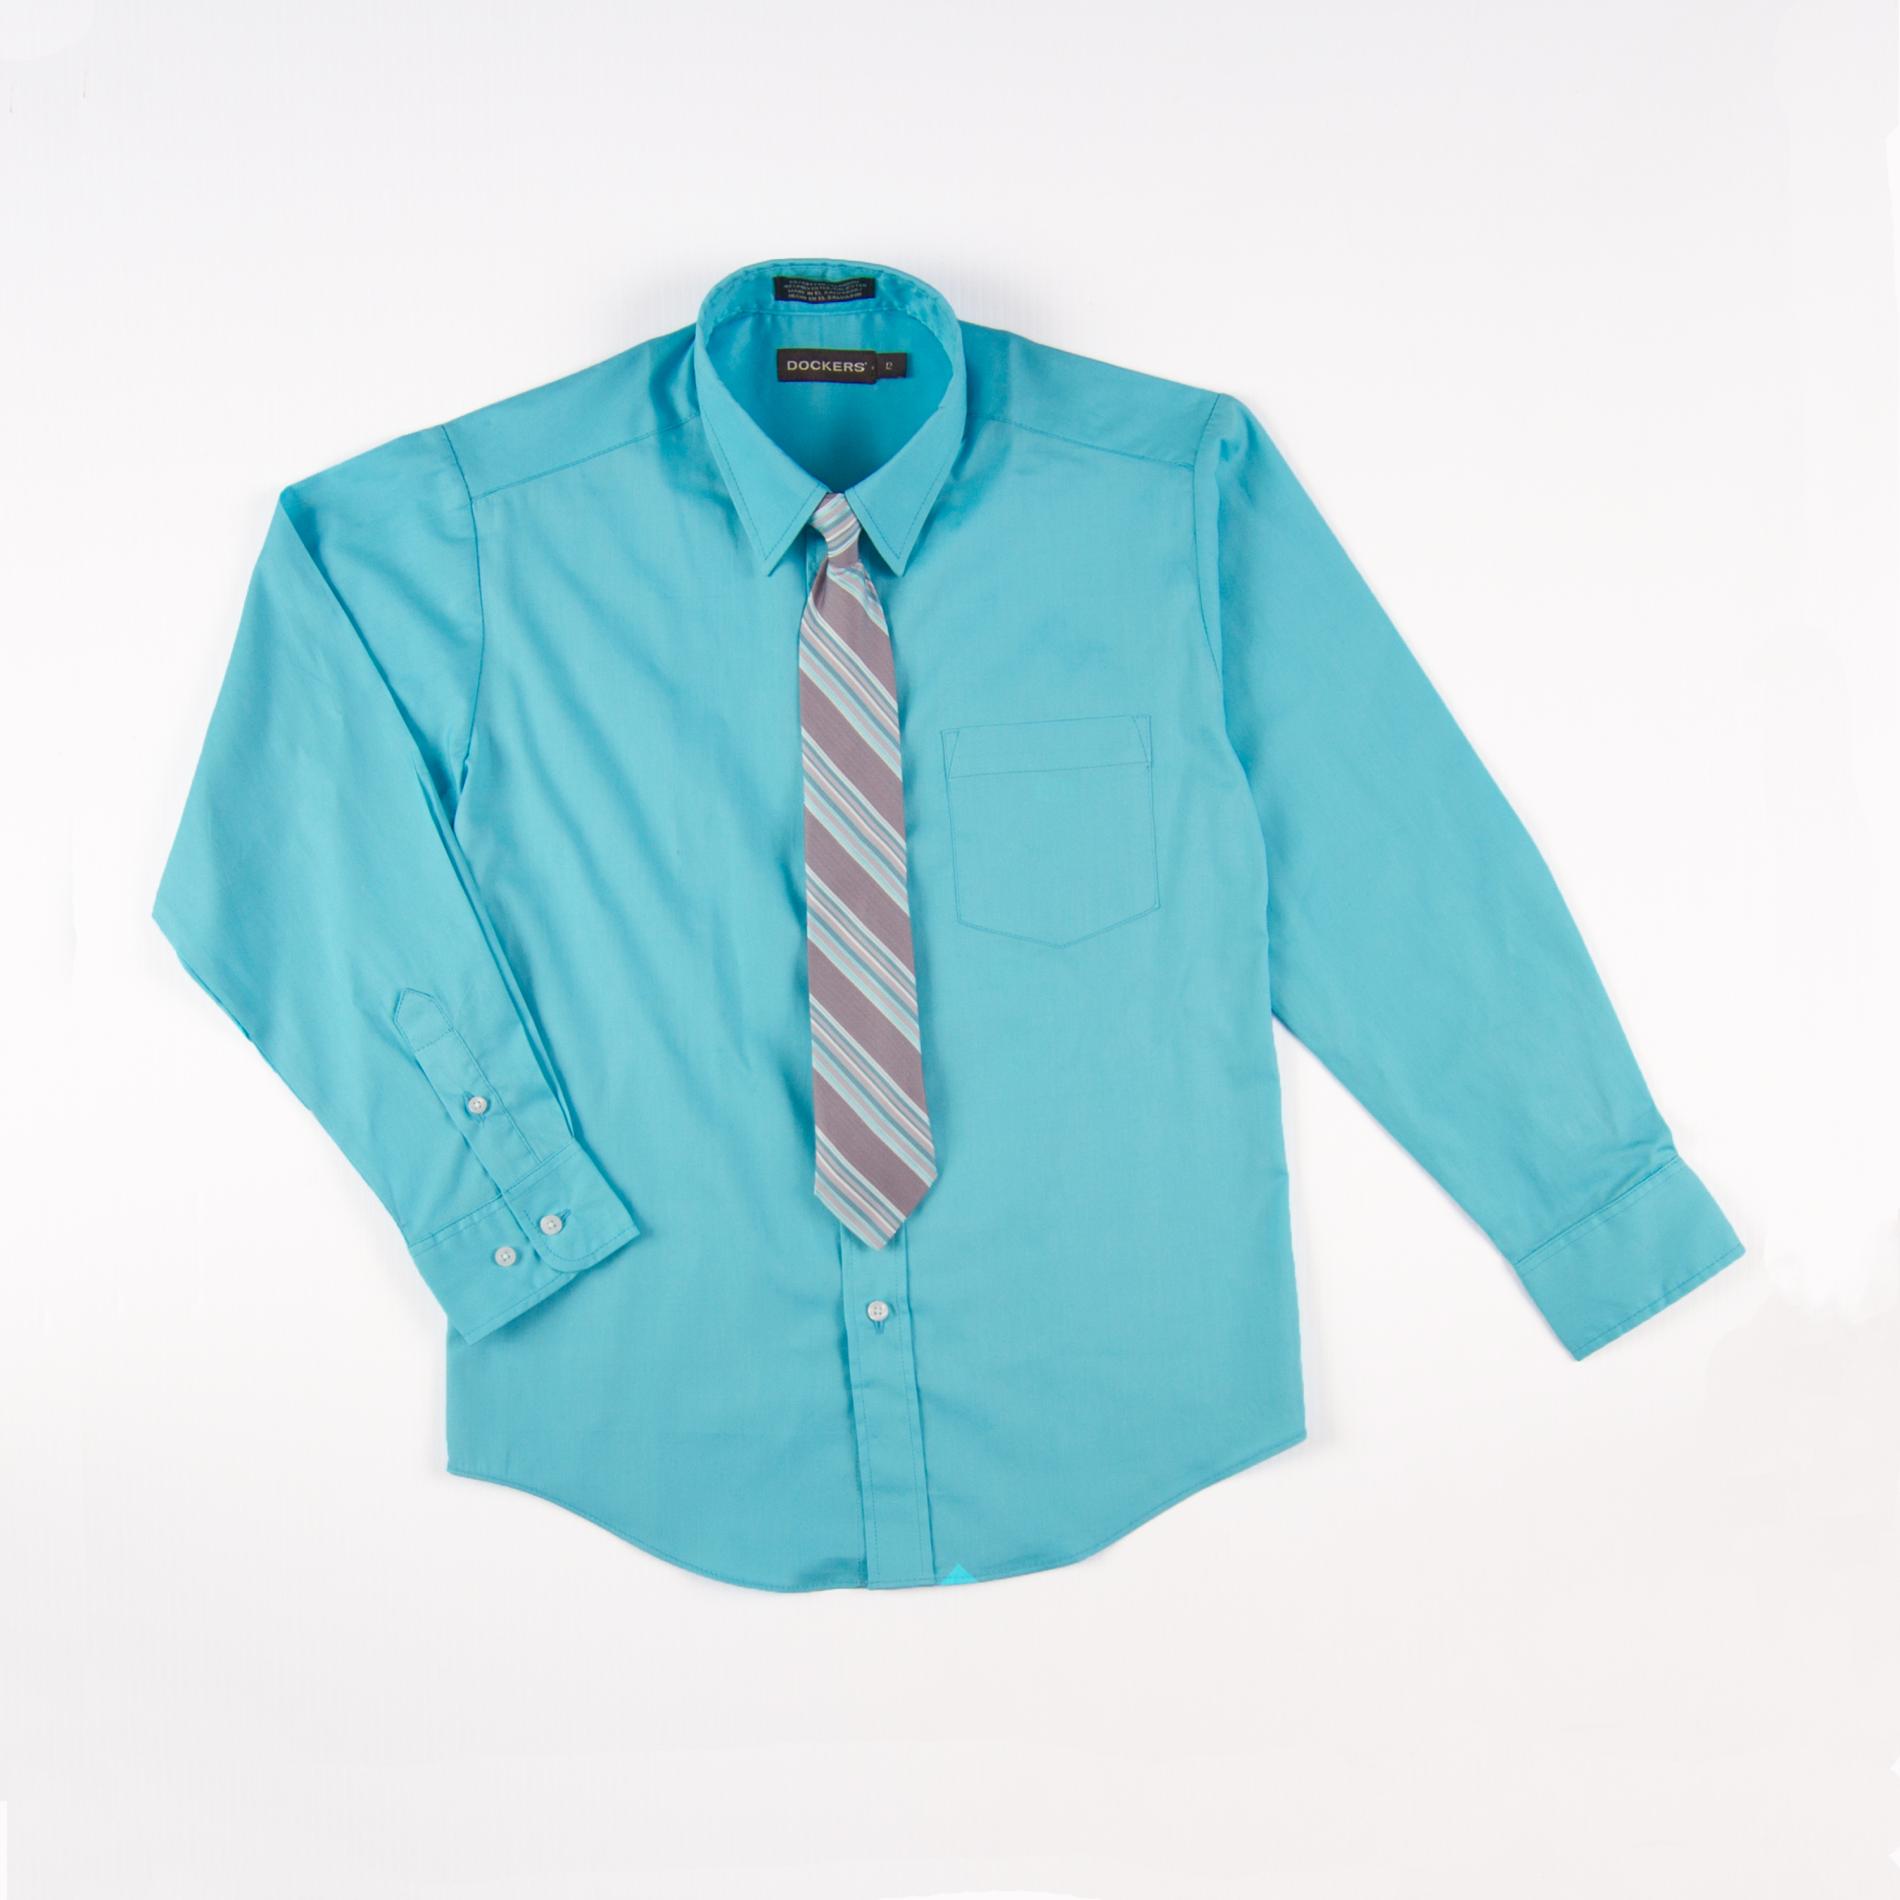 Dockers Boy's Button-Front Dress Shirt & Tie - Striped